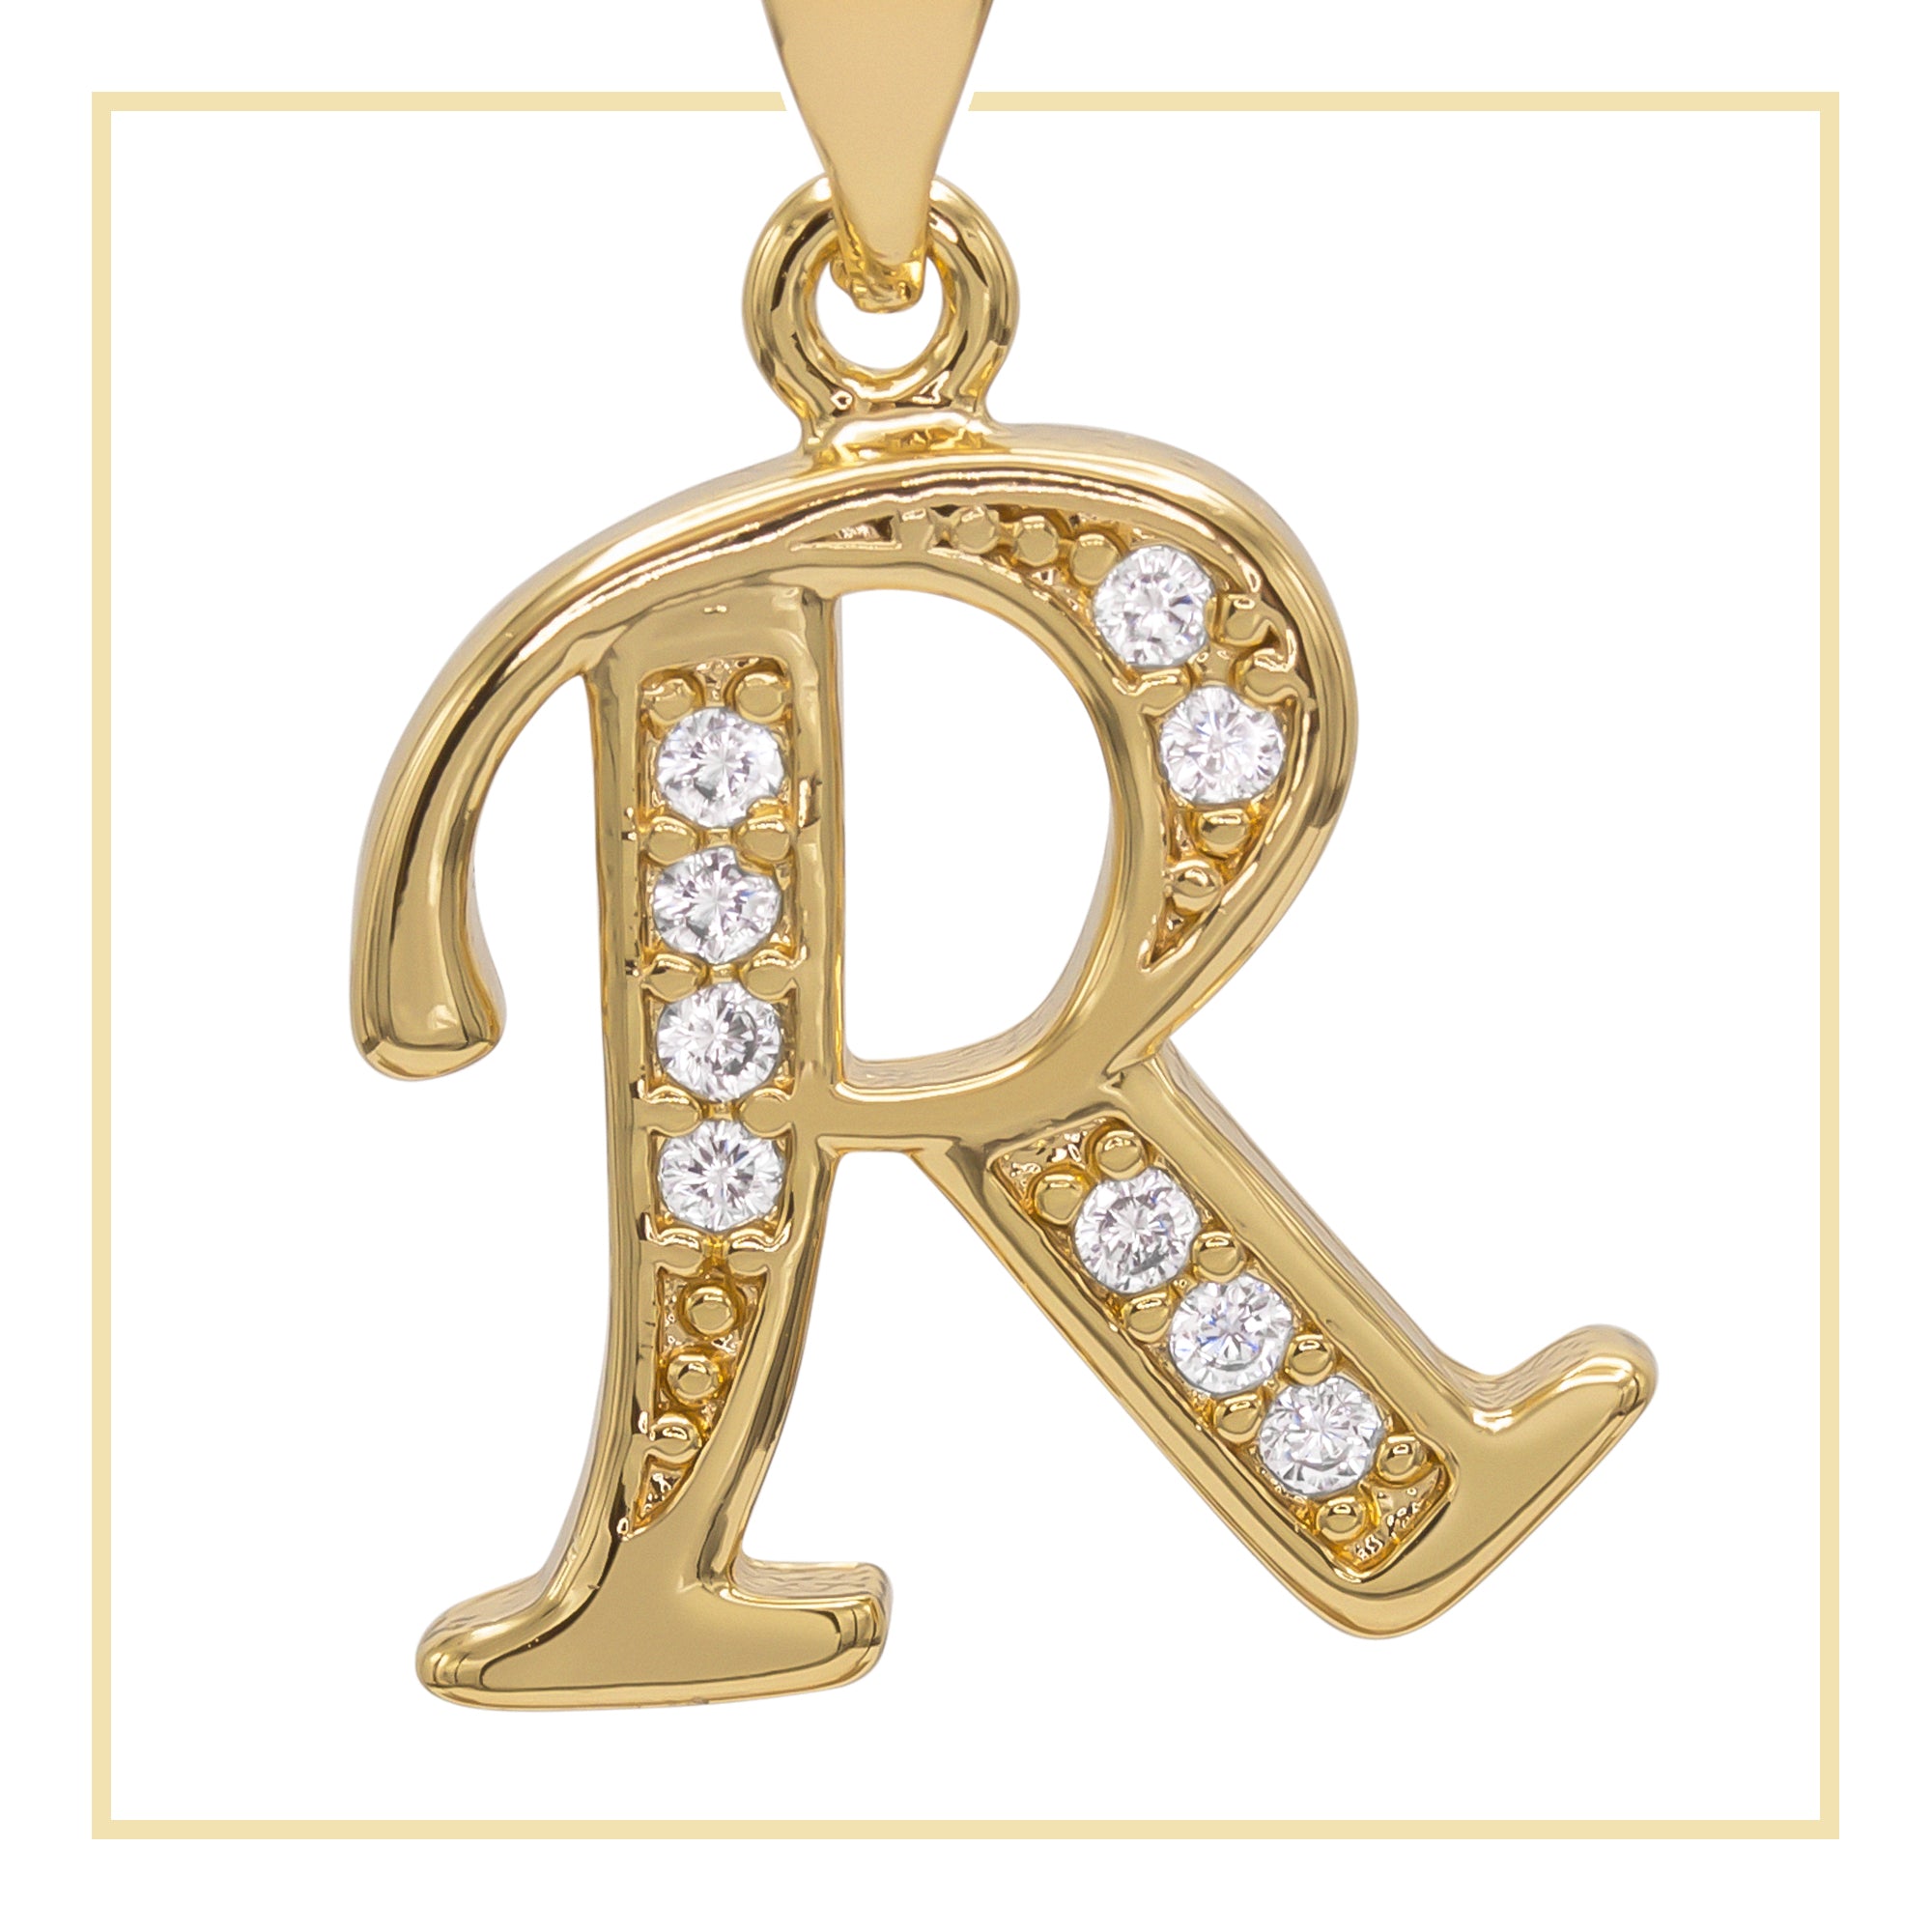 R Letter Initial 14K Gold Filled Letter Pendant